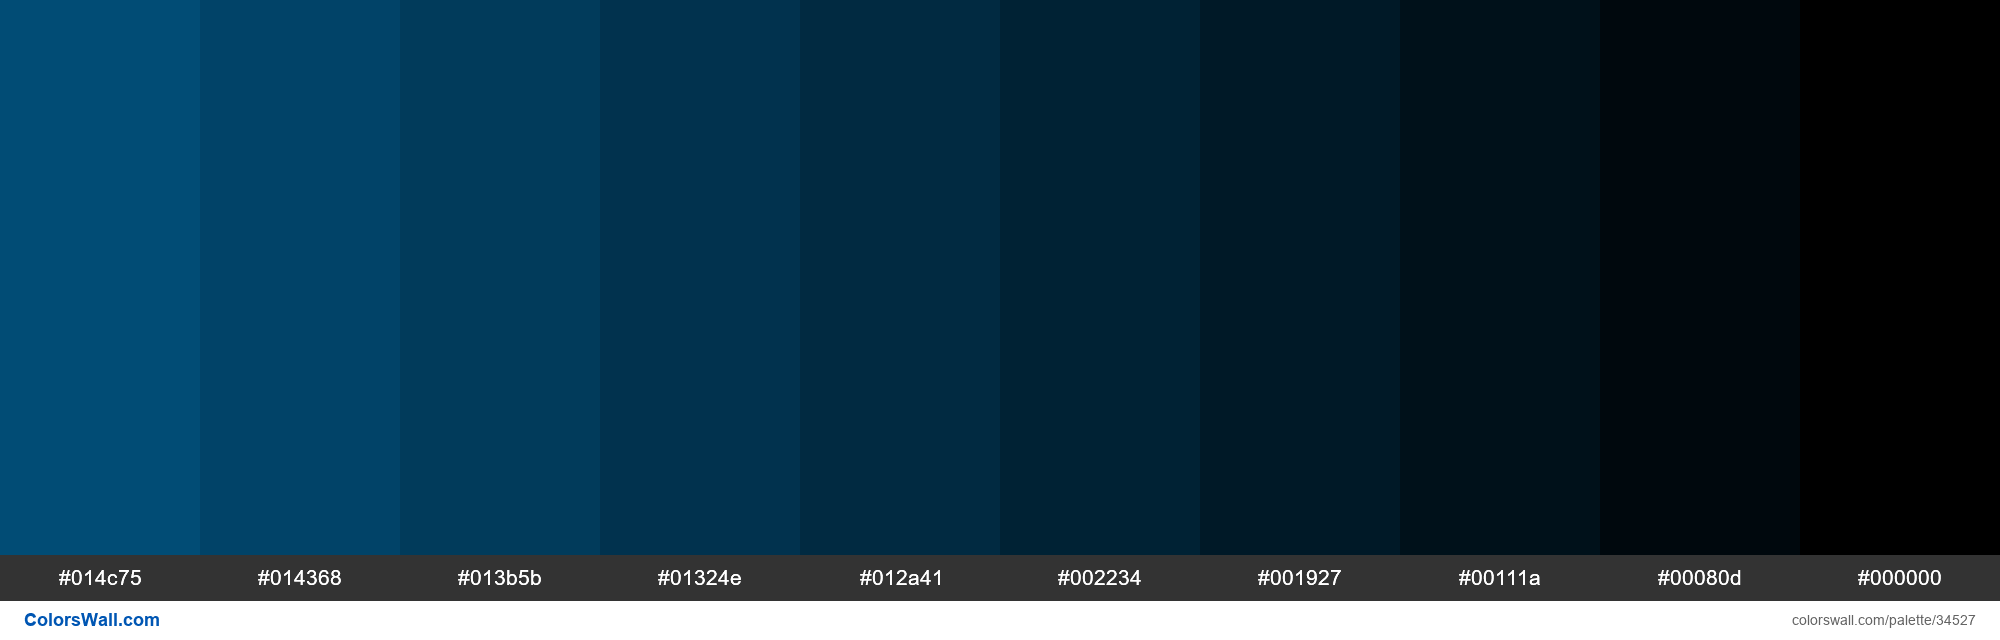 Shades Xkcd Color Deep Sea Blue 015482 Hex 34527 Colorswall 